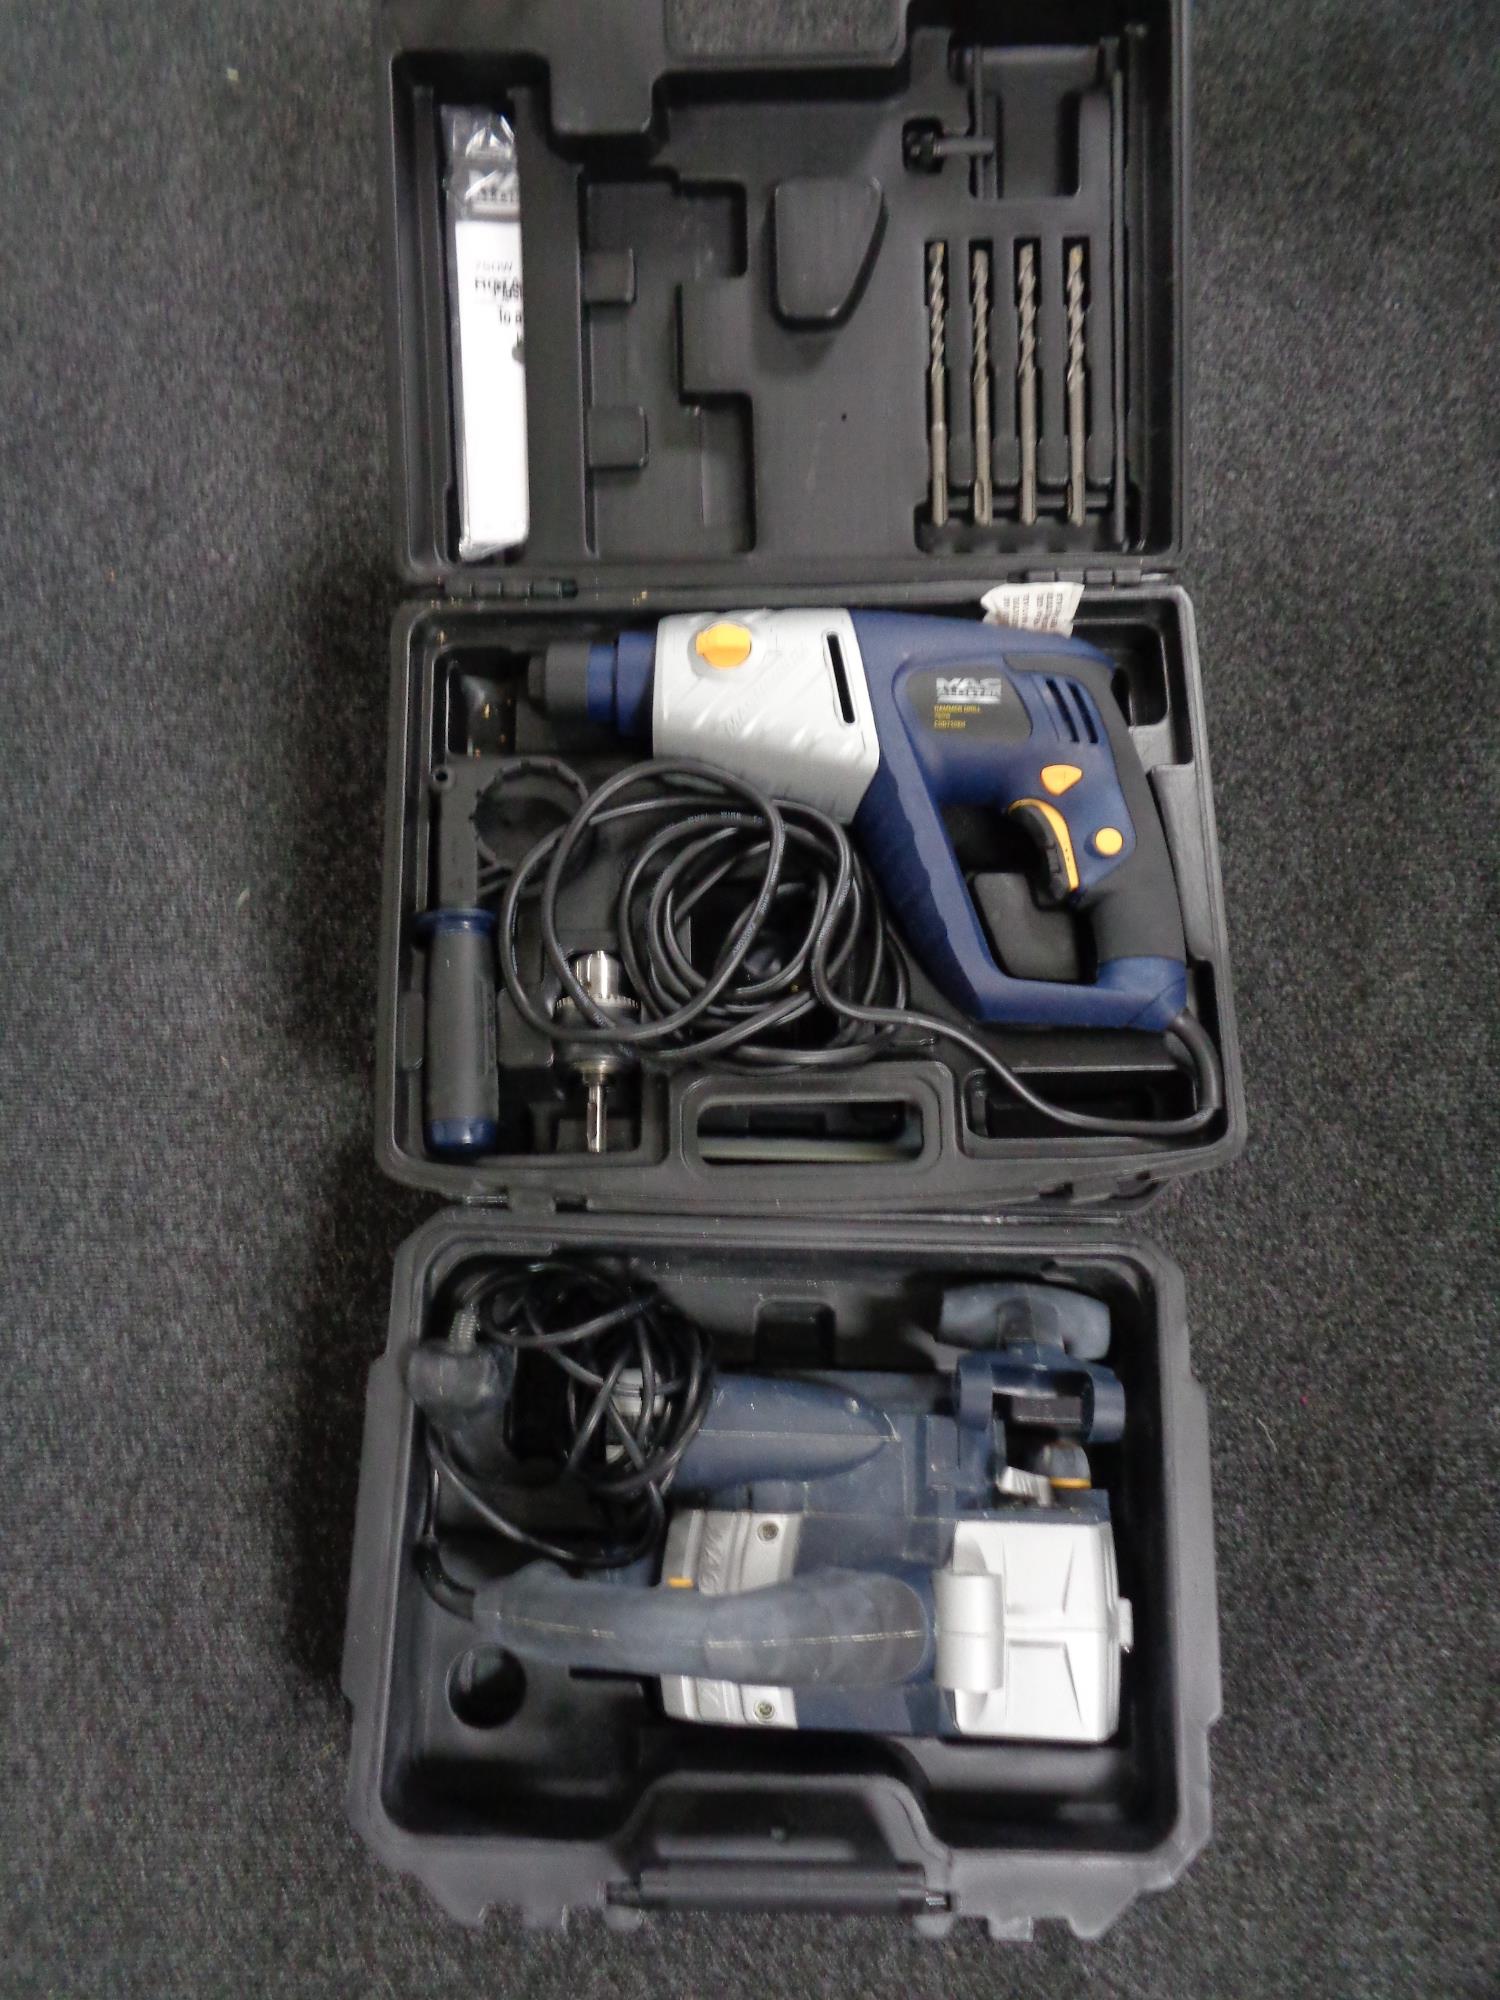 Two cased Macallister power tools - 750 watt hammer drill and Belt sander